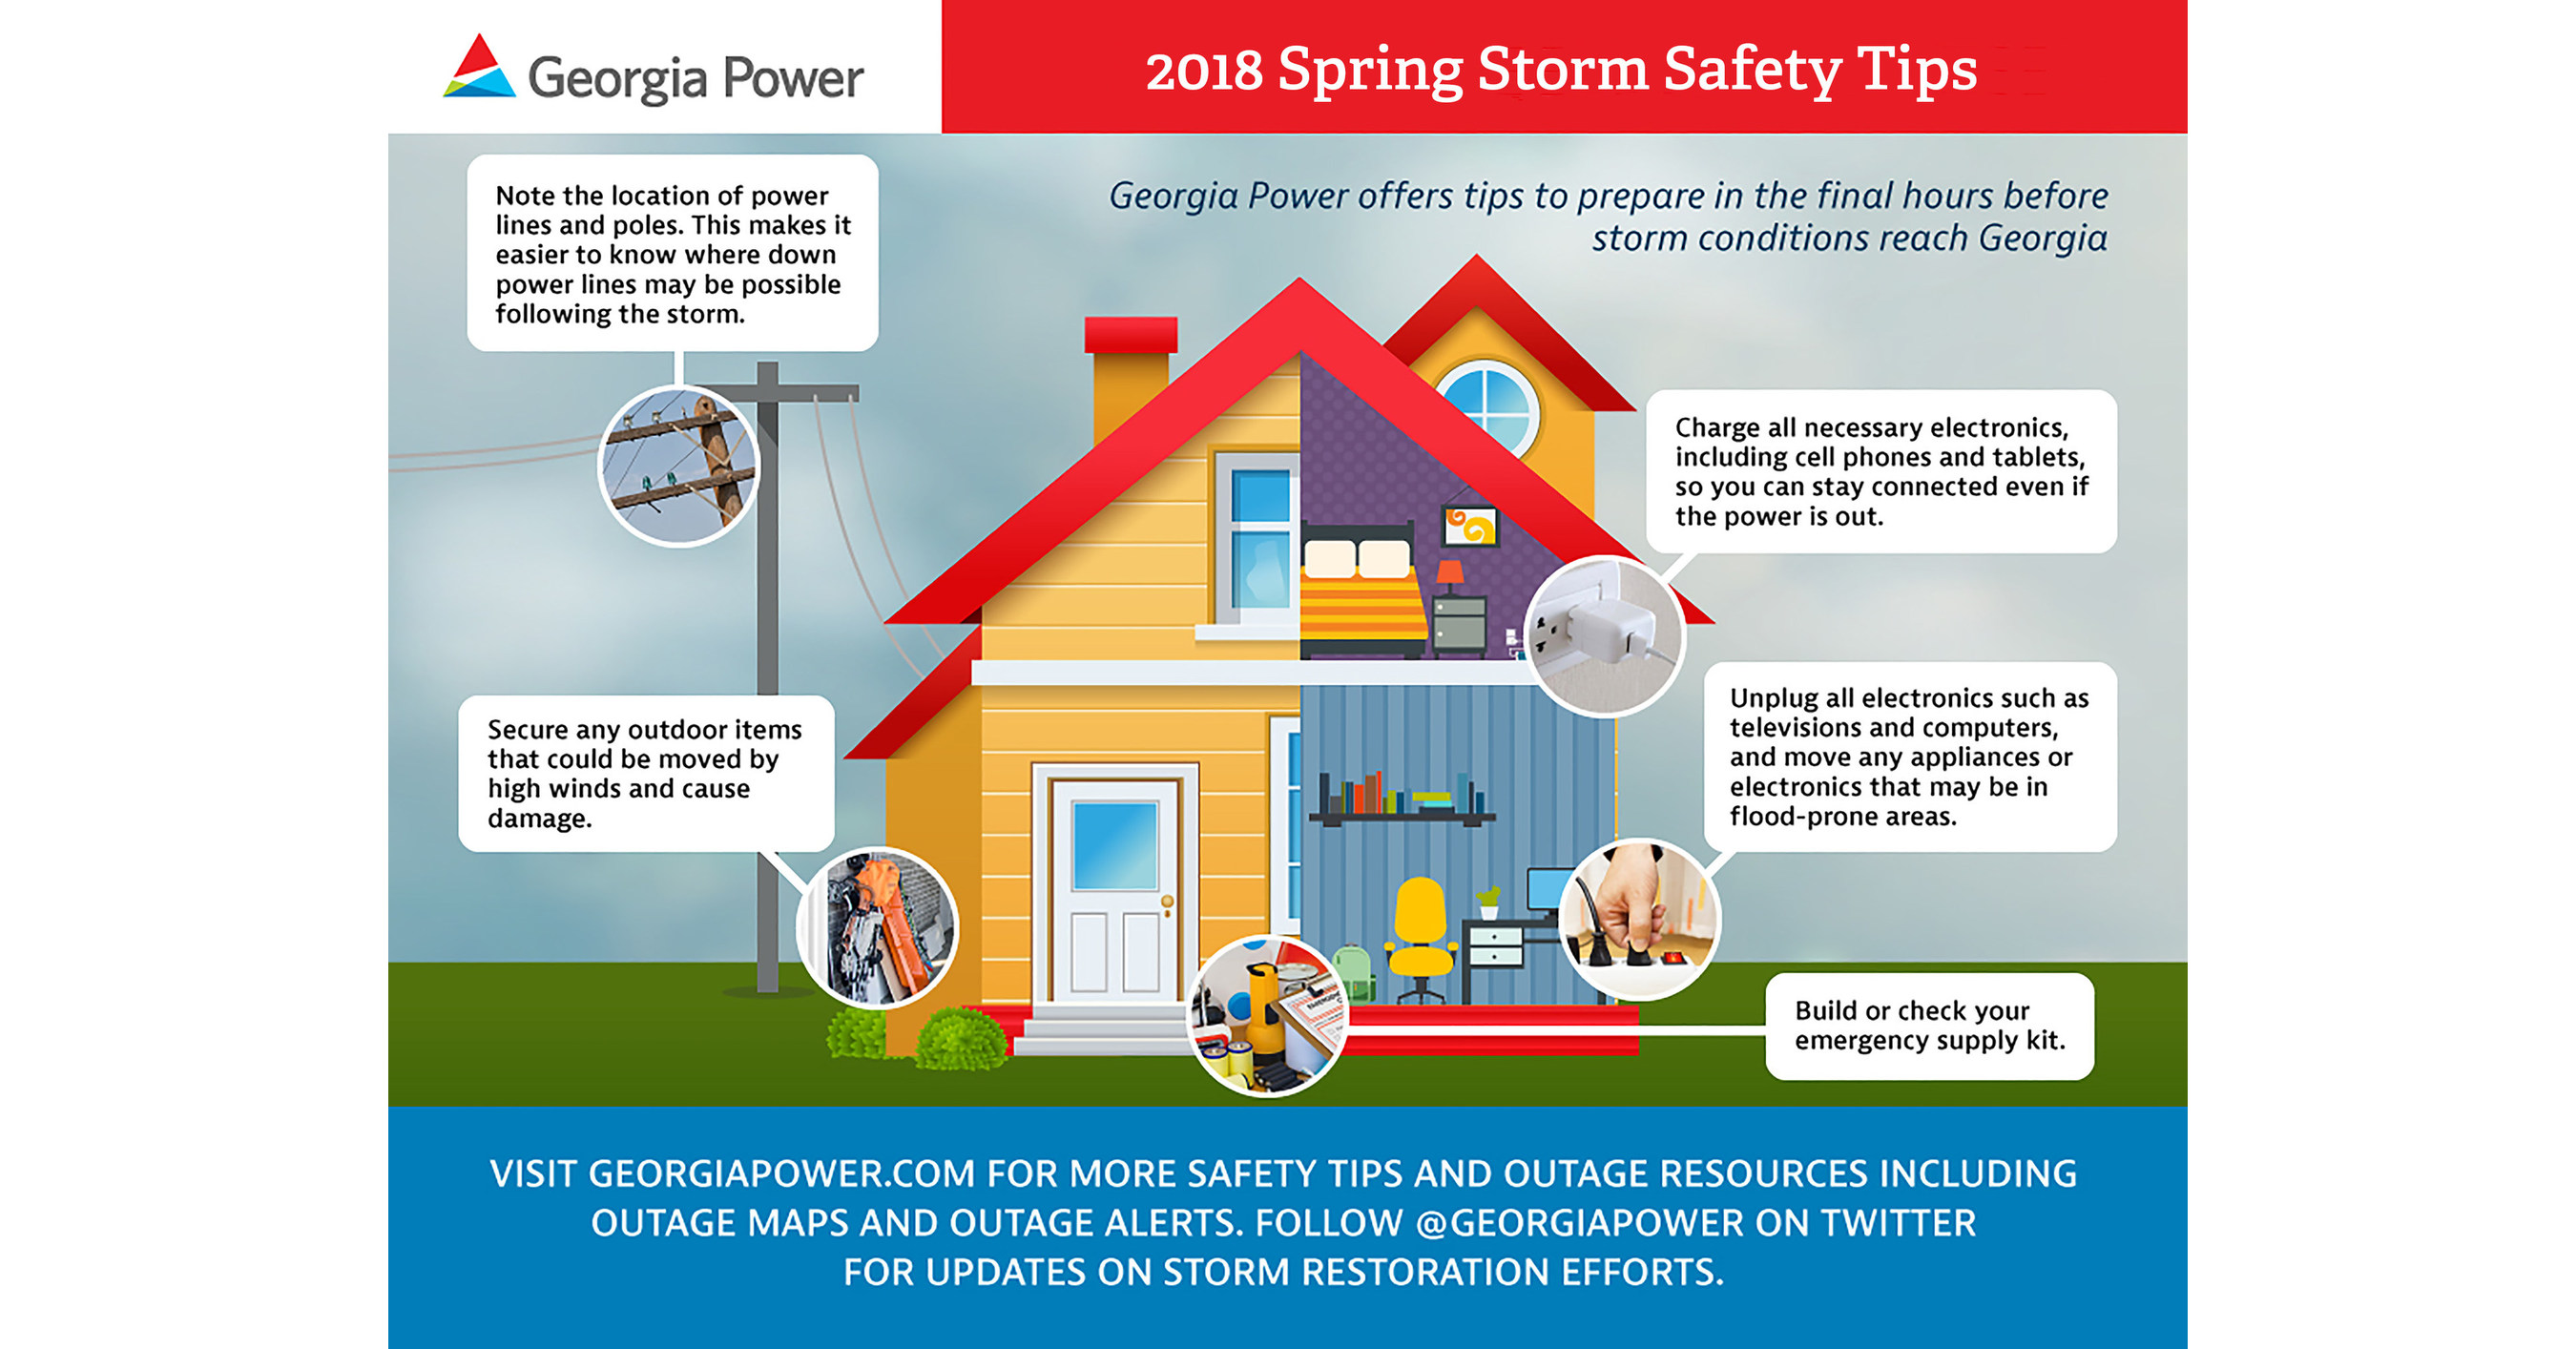 https://mma.prnewswire.com/media/661048/Georgia_Power_2018_Spring_Storm_Infographic.jpg?p=facebook